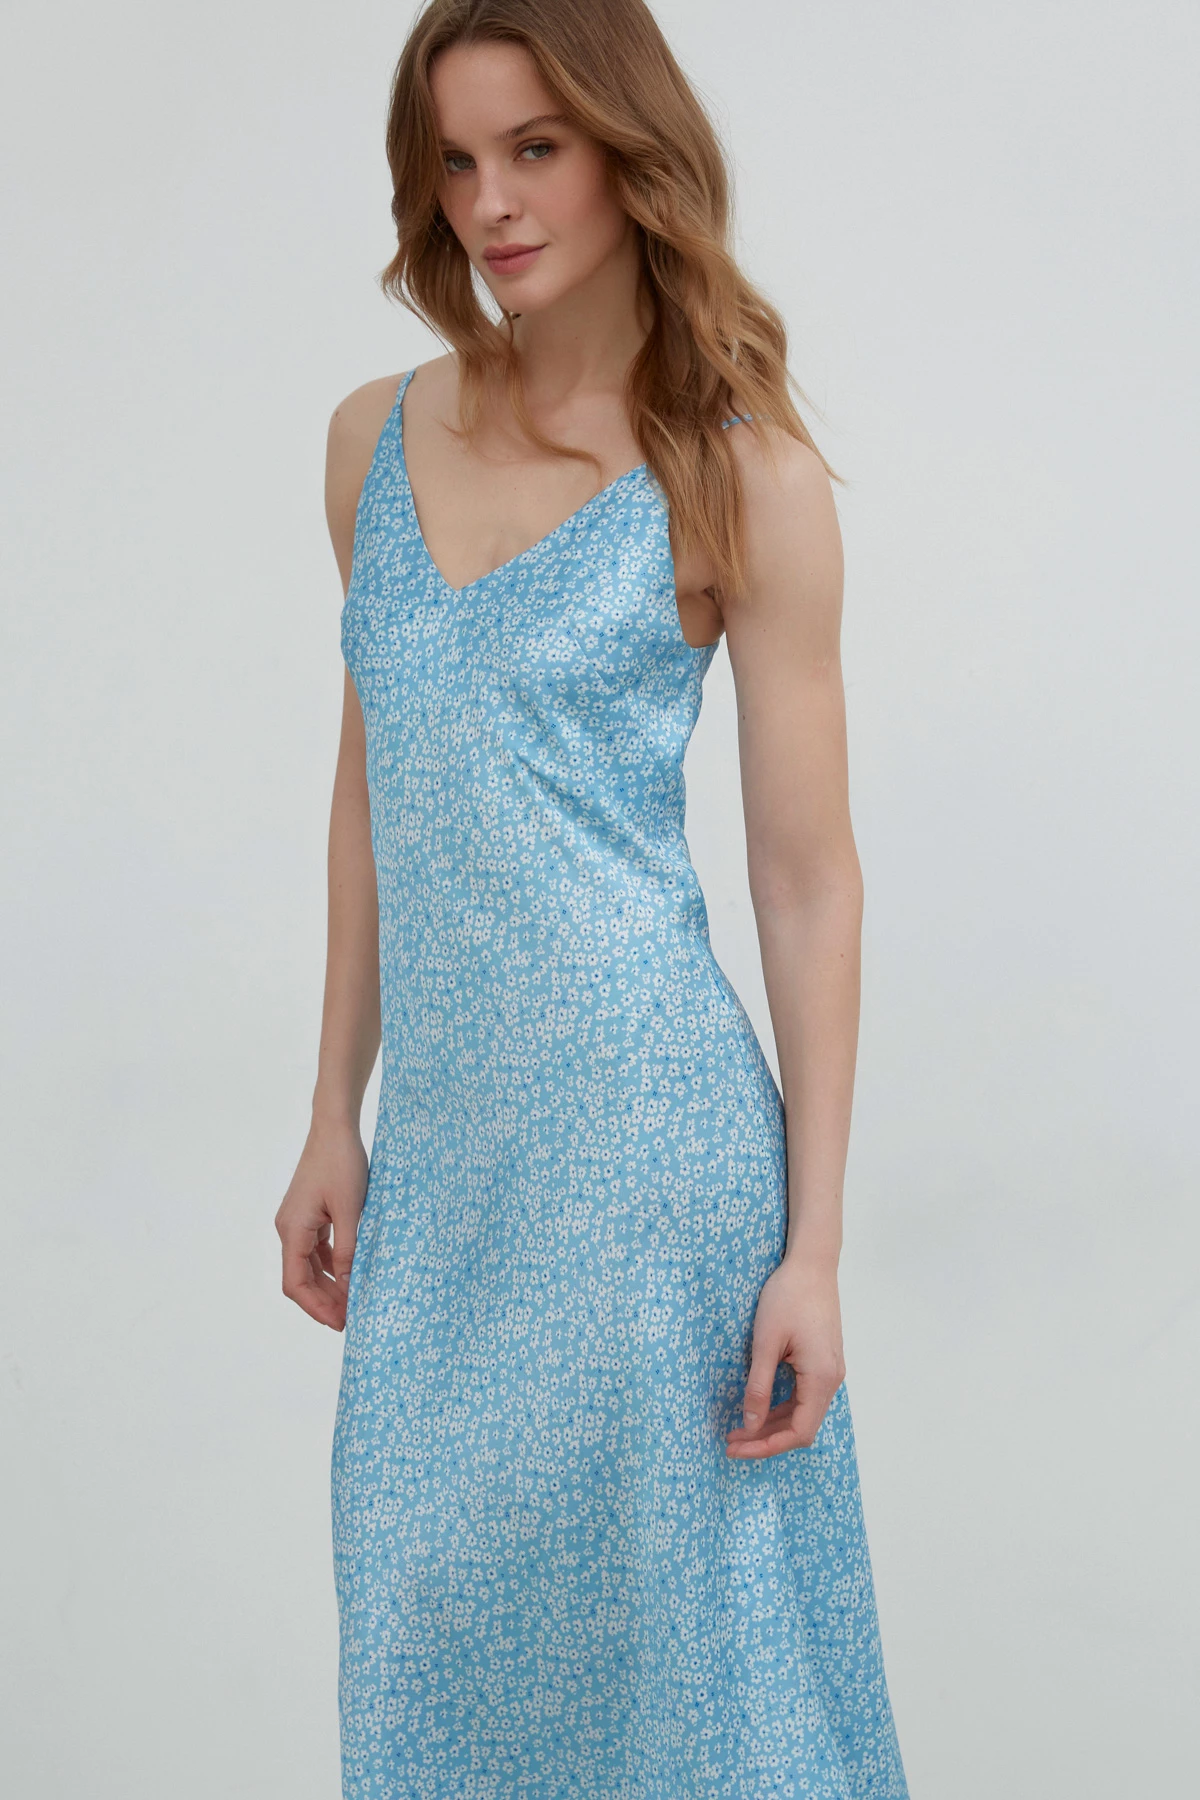 Blue satin midi lenght slip dress in "milky flowers" print, photo 4